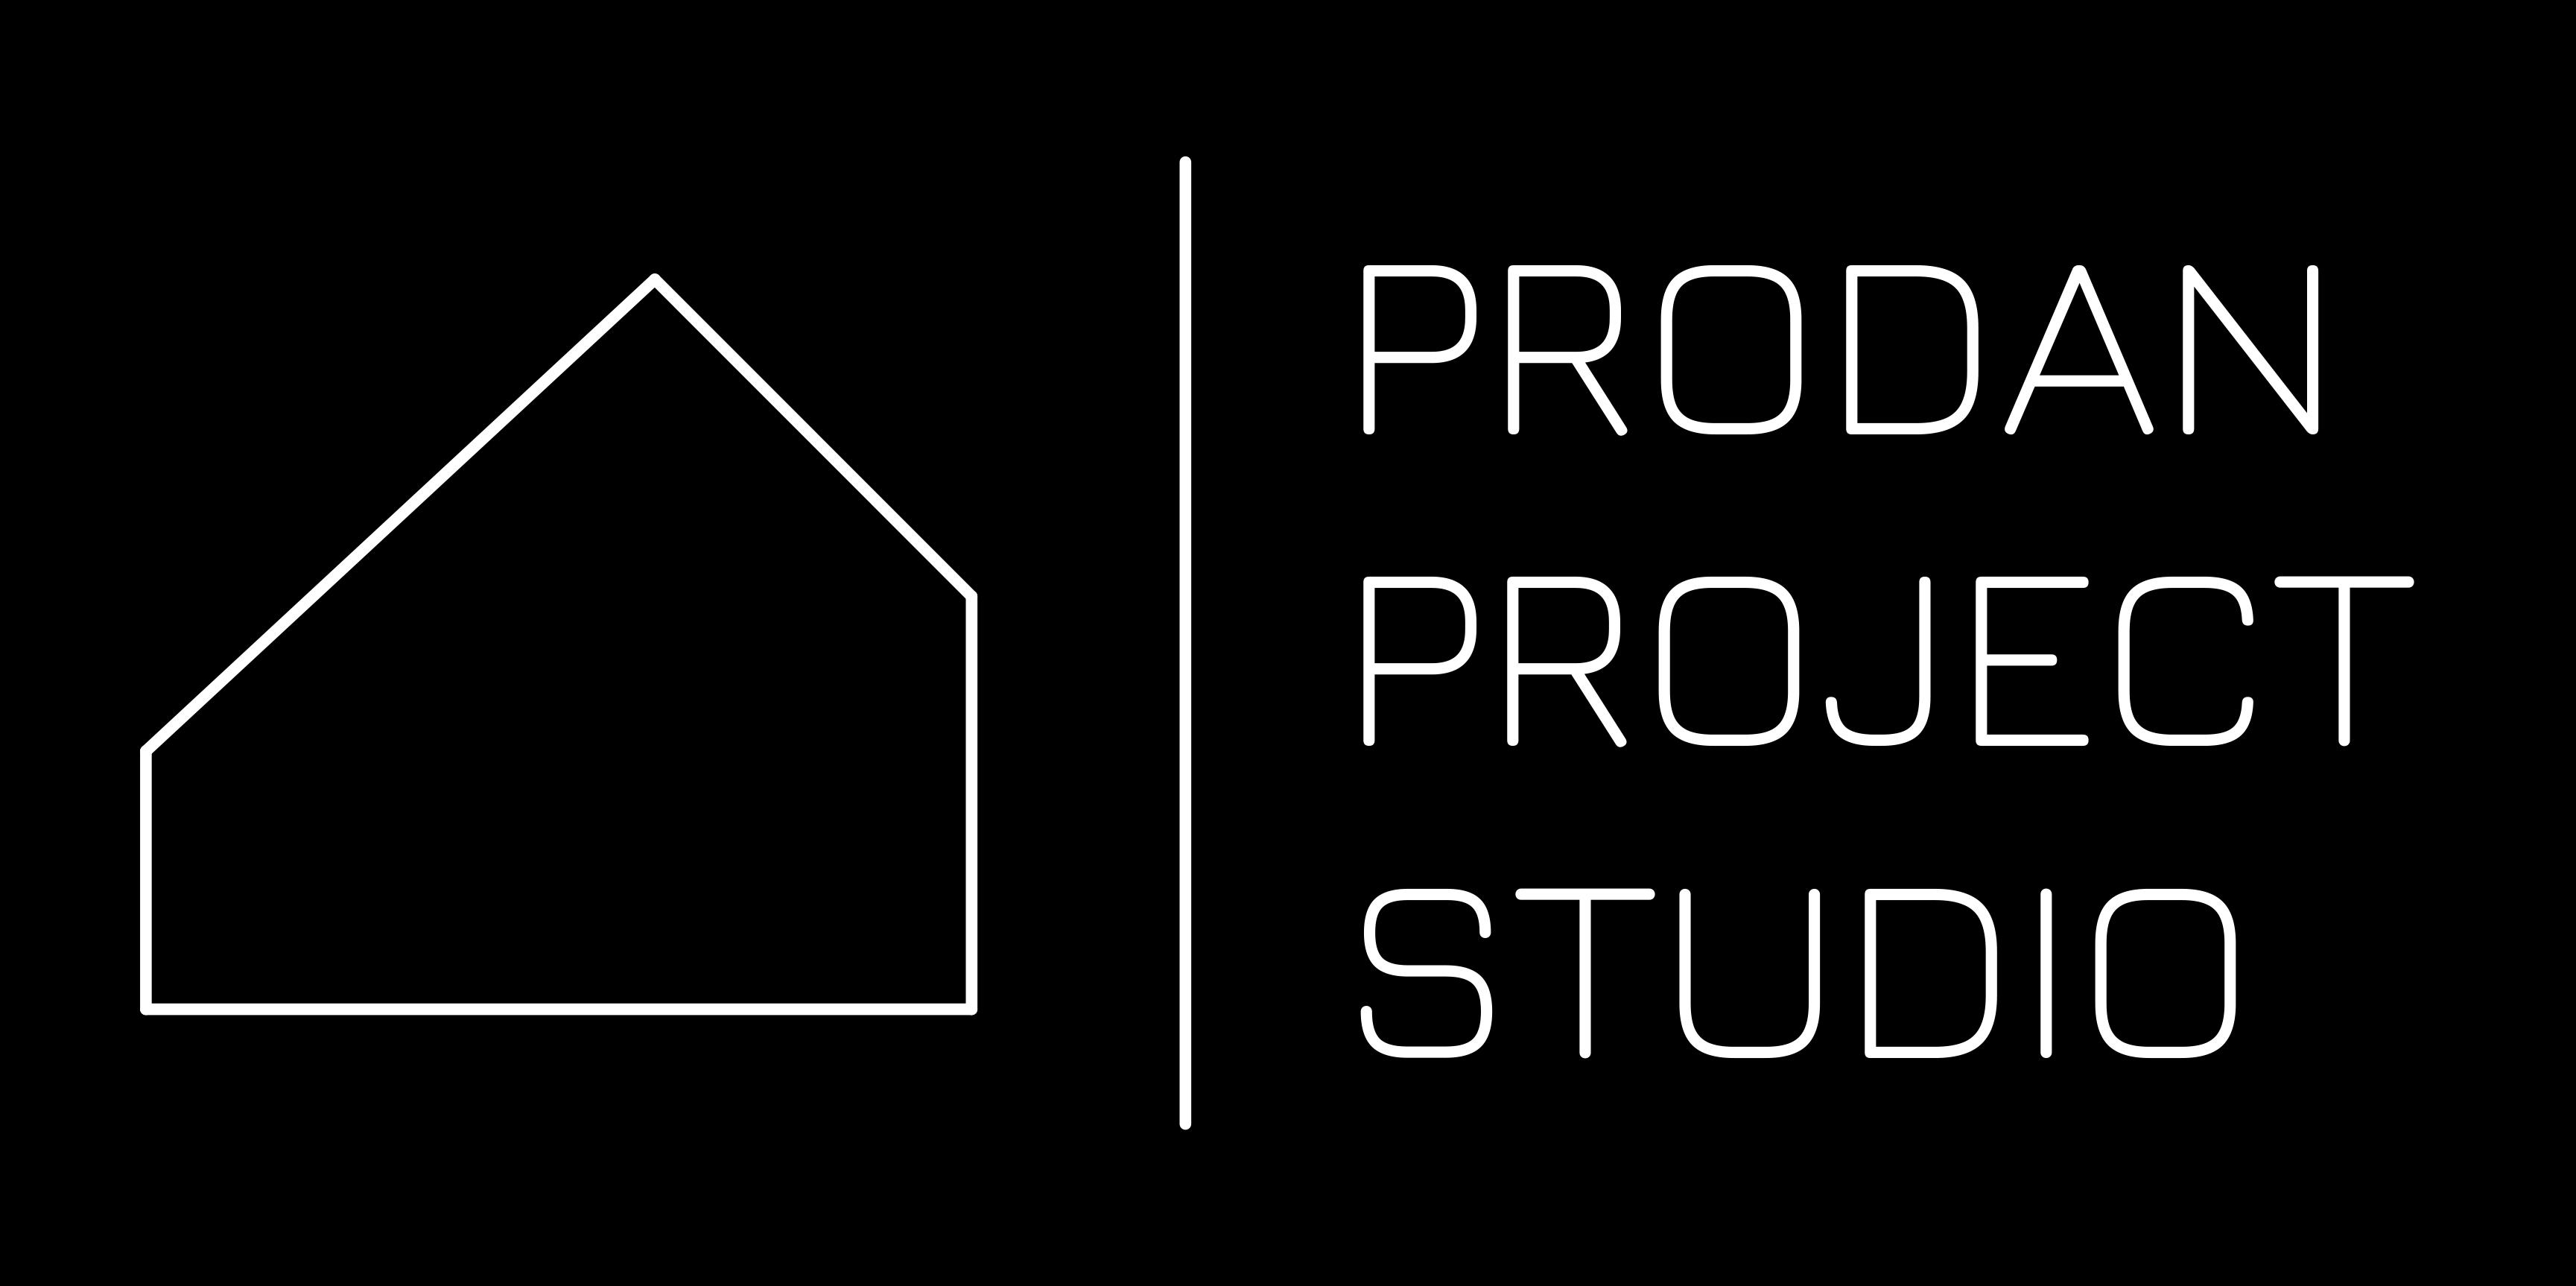 Prodan Project Studio Logo